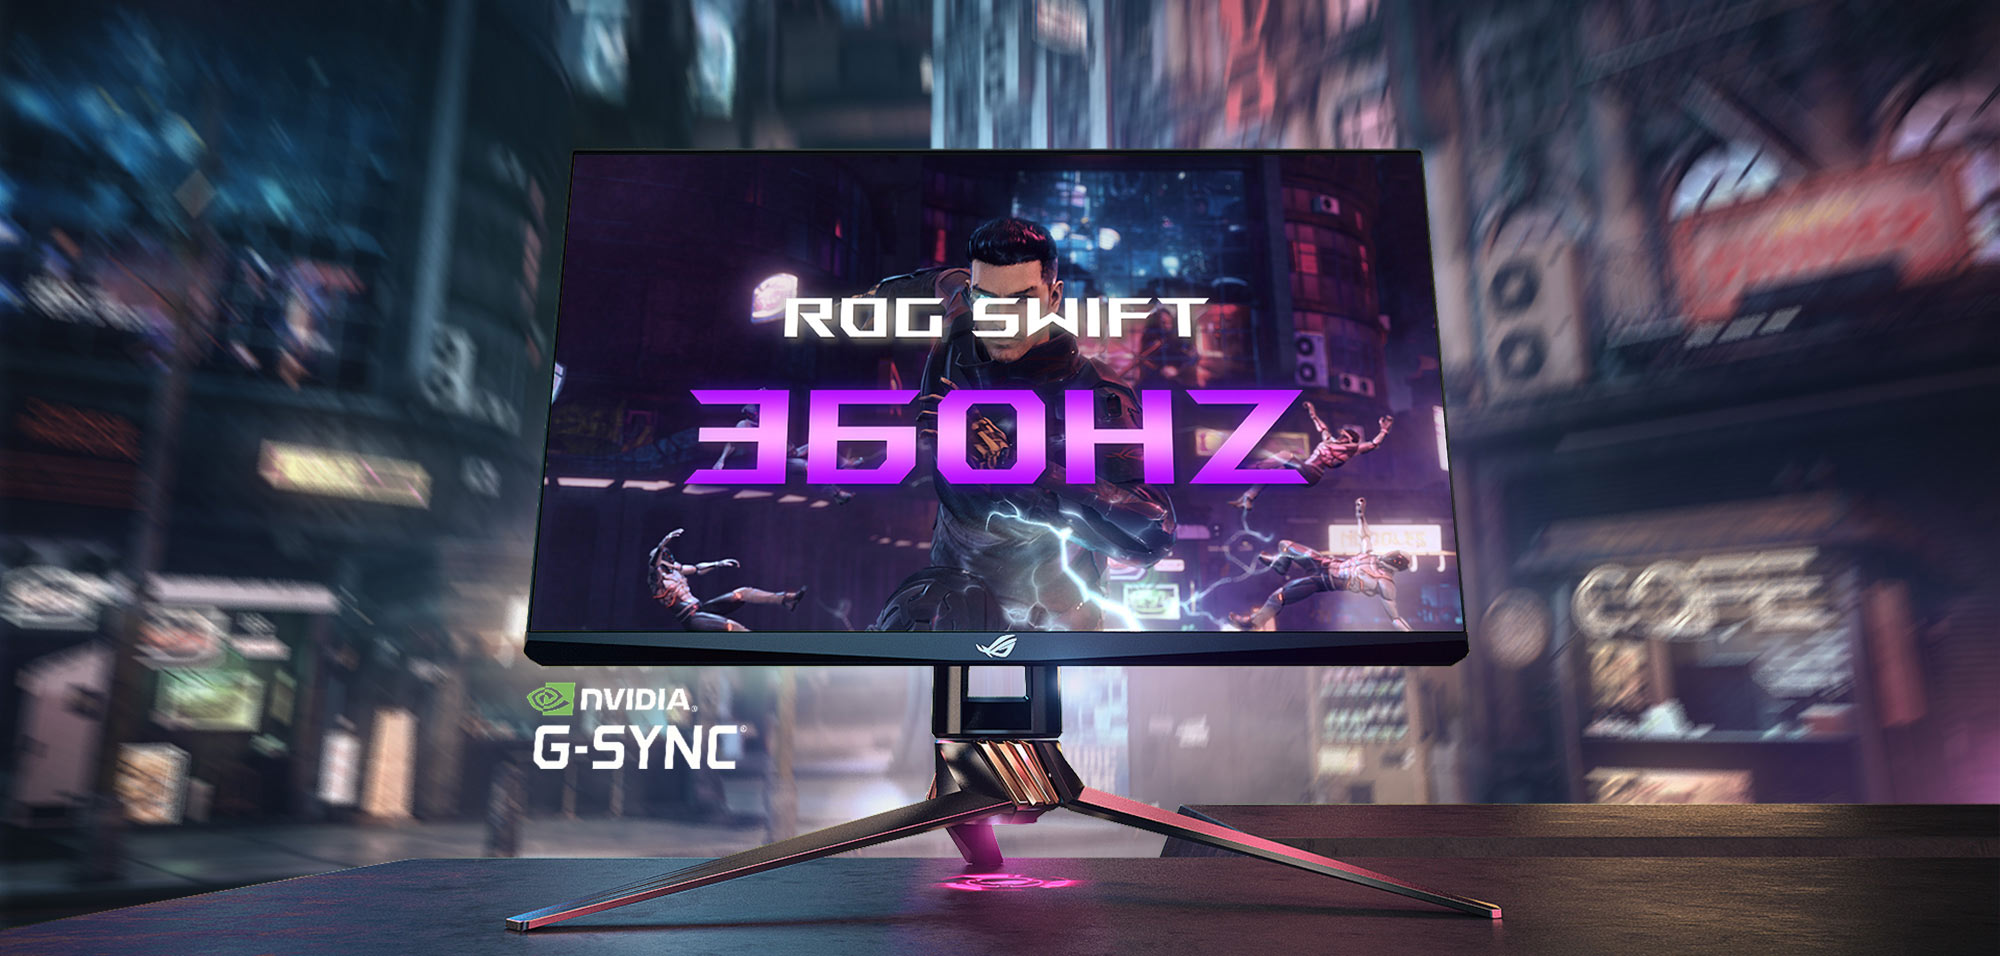 ROG-Swift-360hz-banner